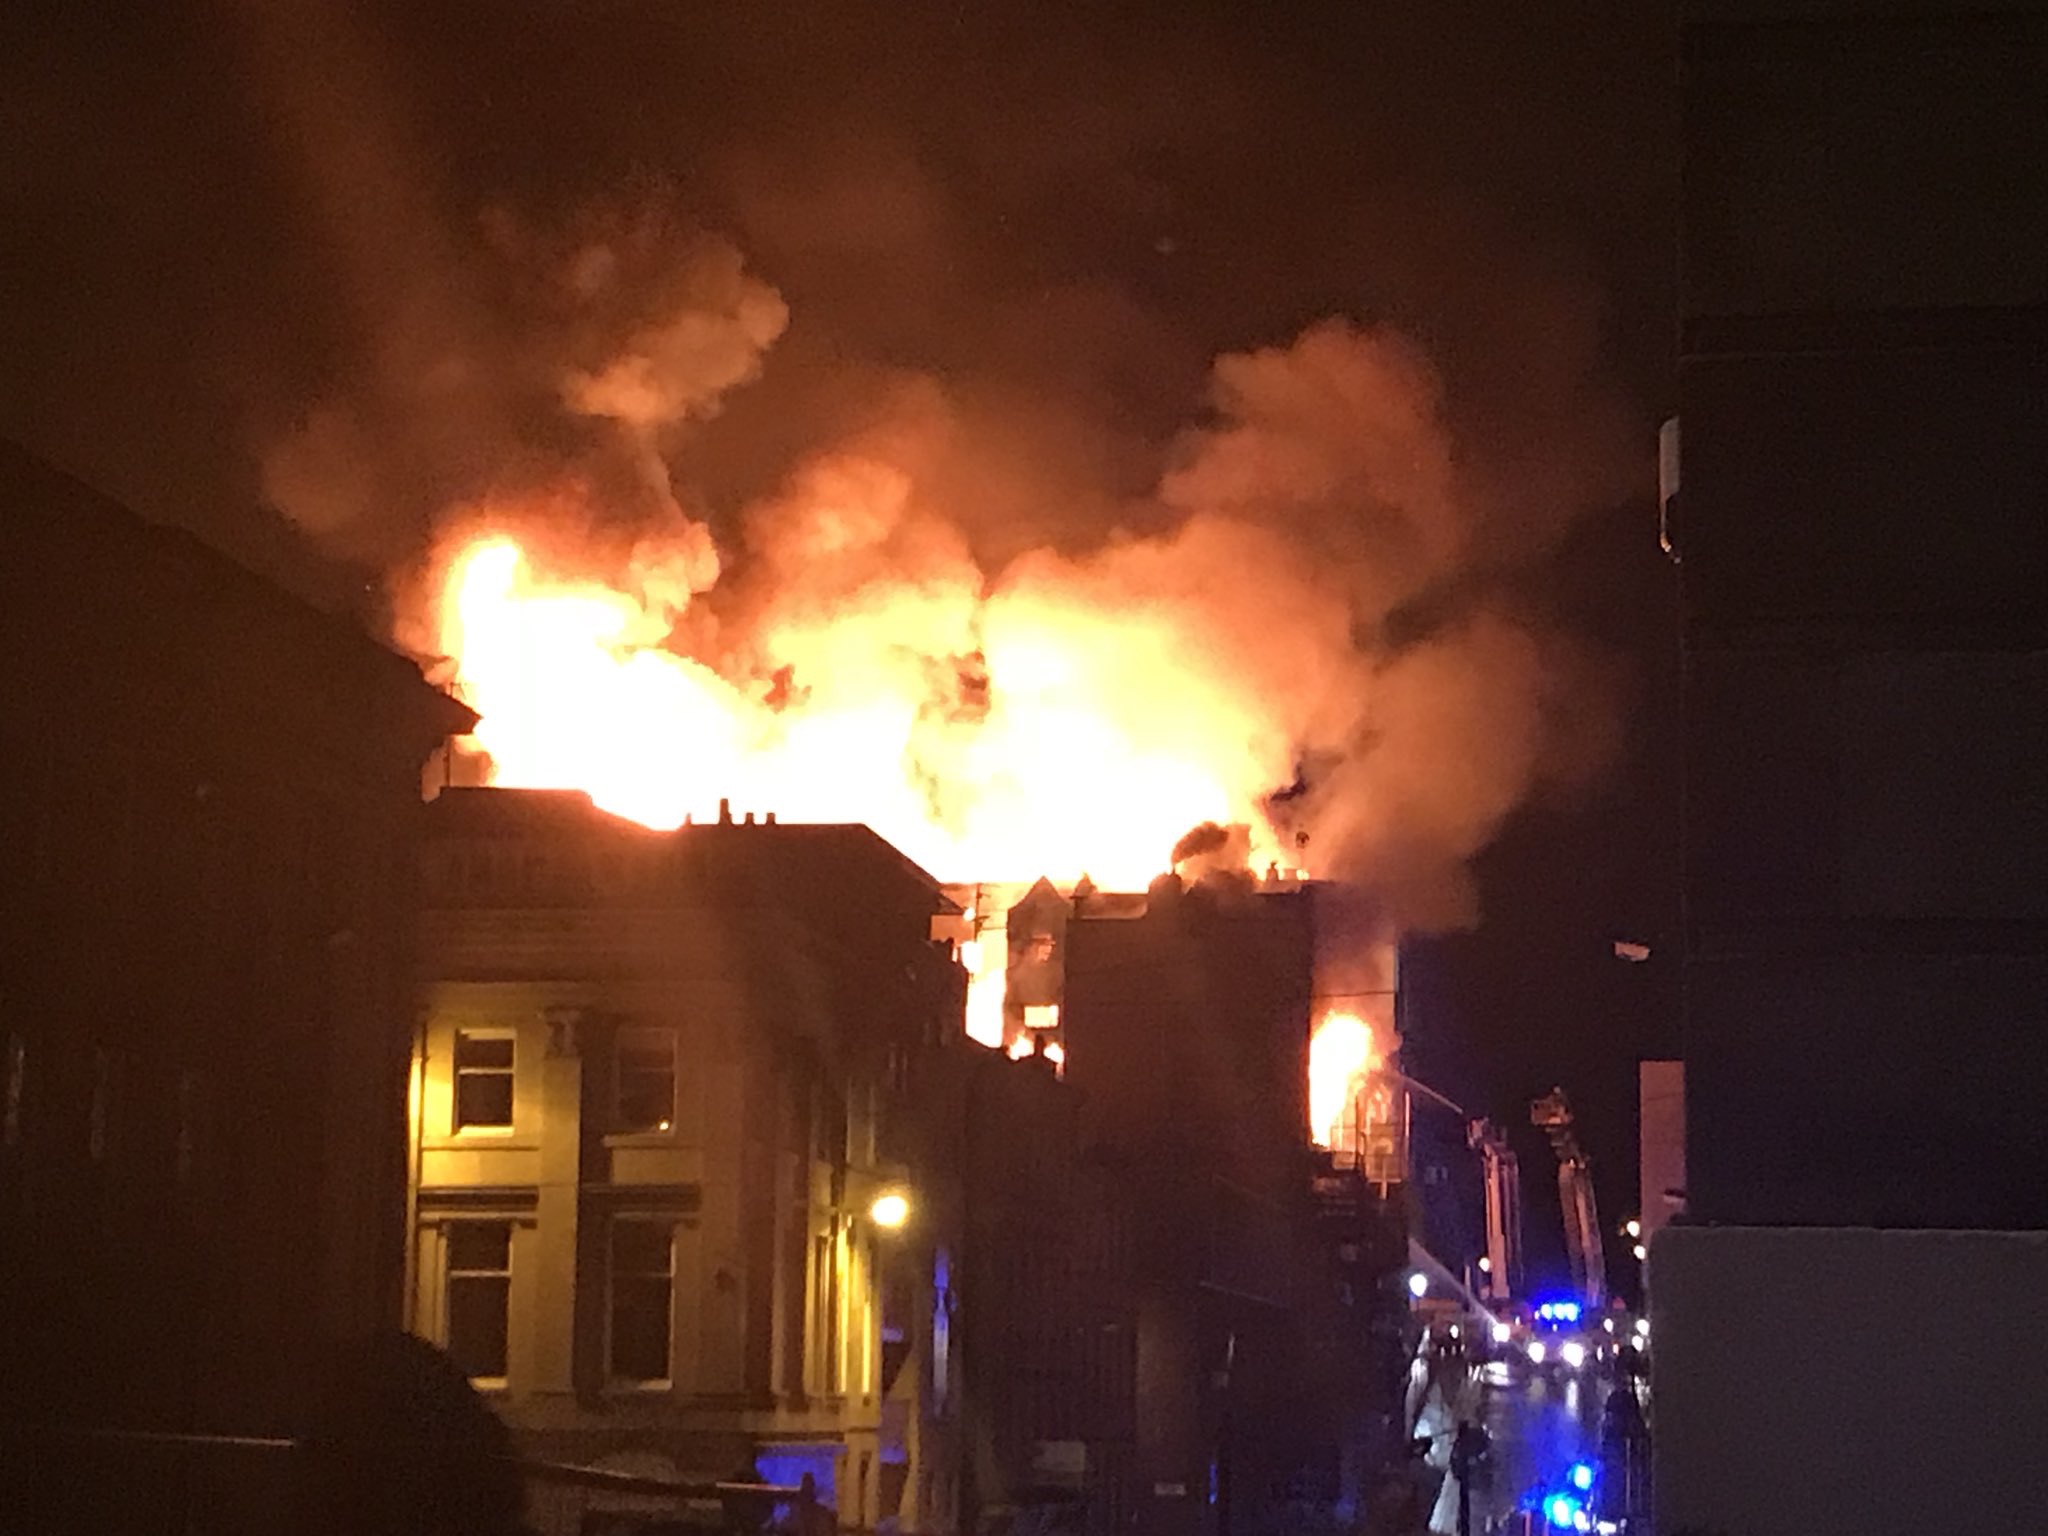 Glasgow School of Art in flames (Carlee Thurgate / Twitter)